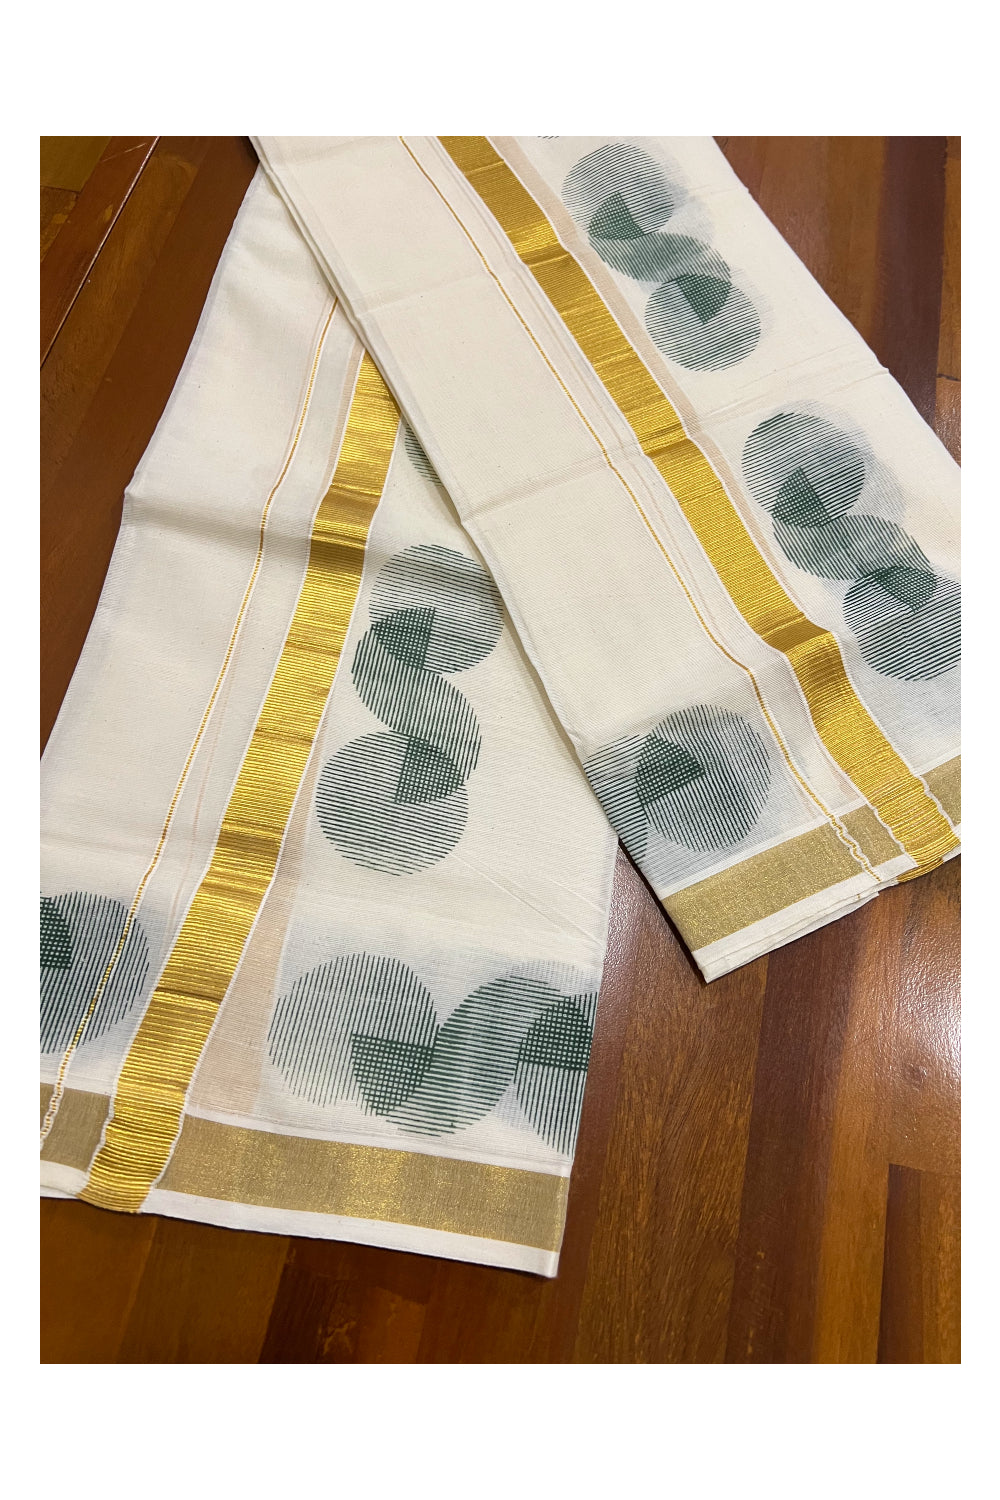 Kerala Cotton Kasavu Set Mundu (Mundum Neriyathum) with Green Block Prints